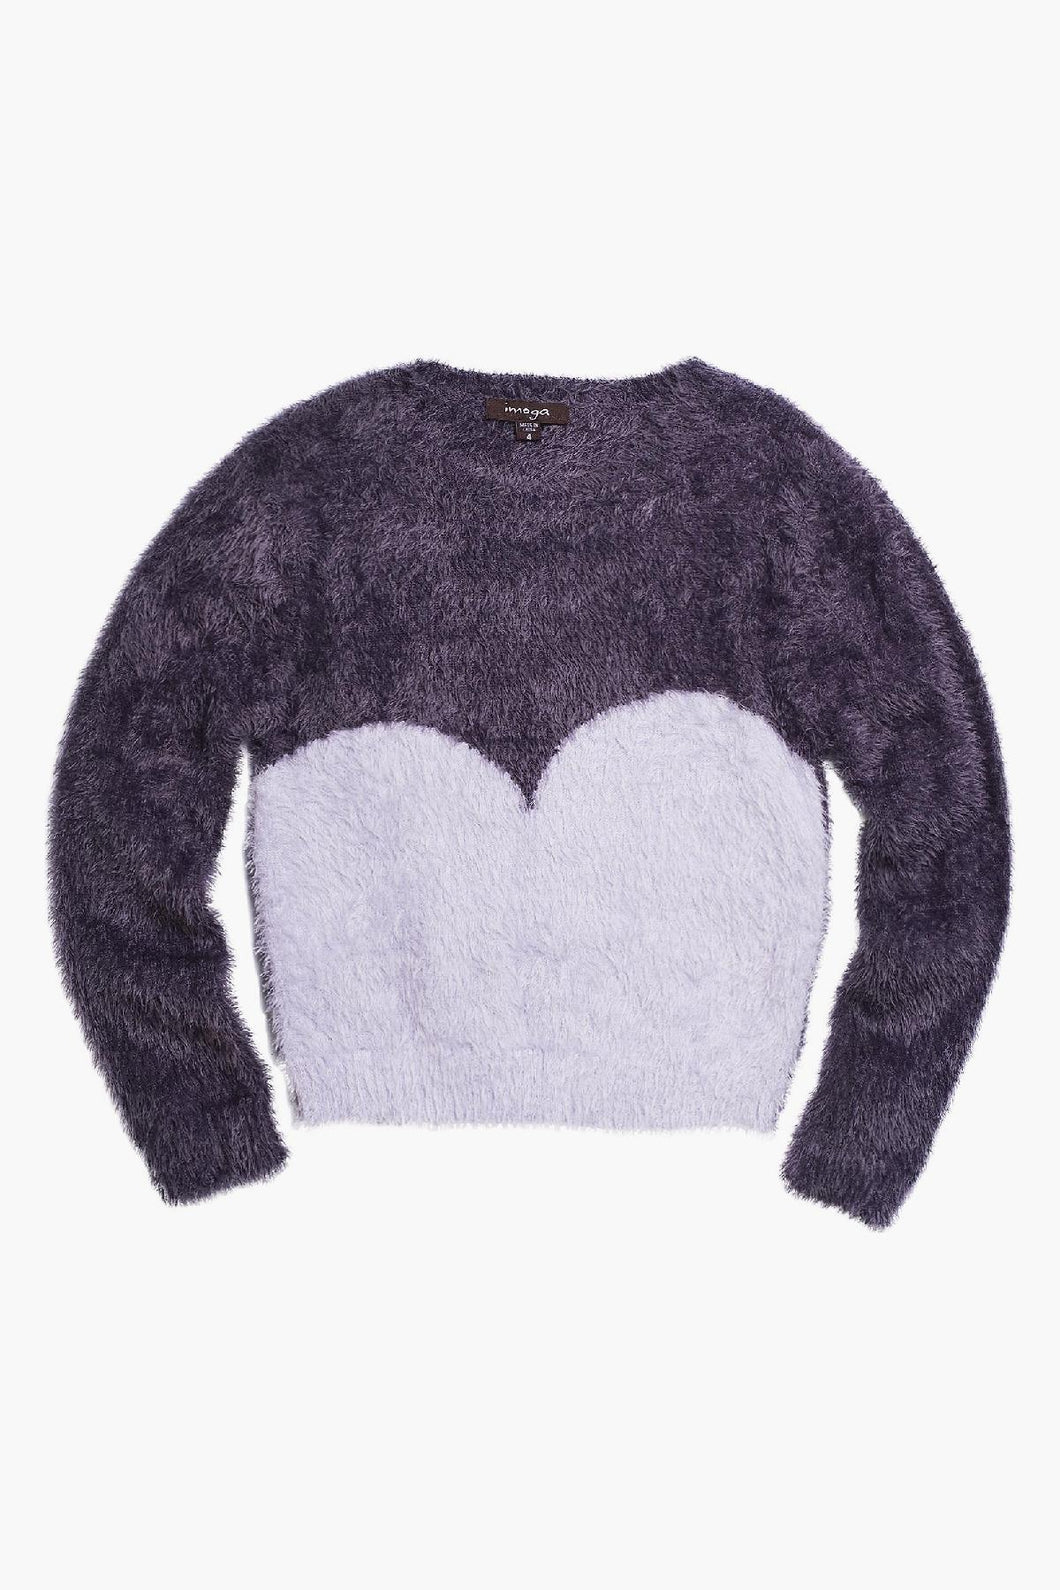 Dorian Sweater - Plum